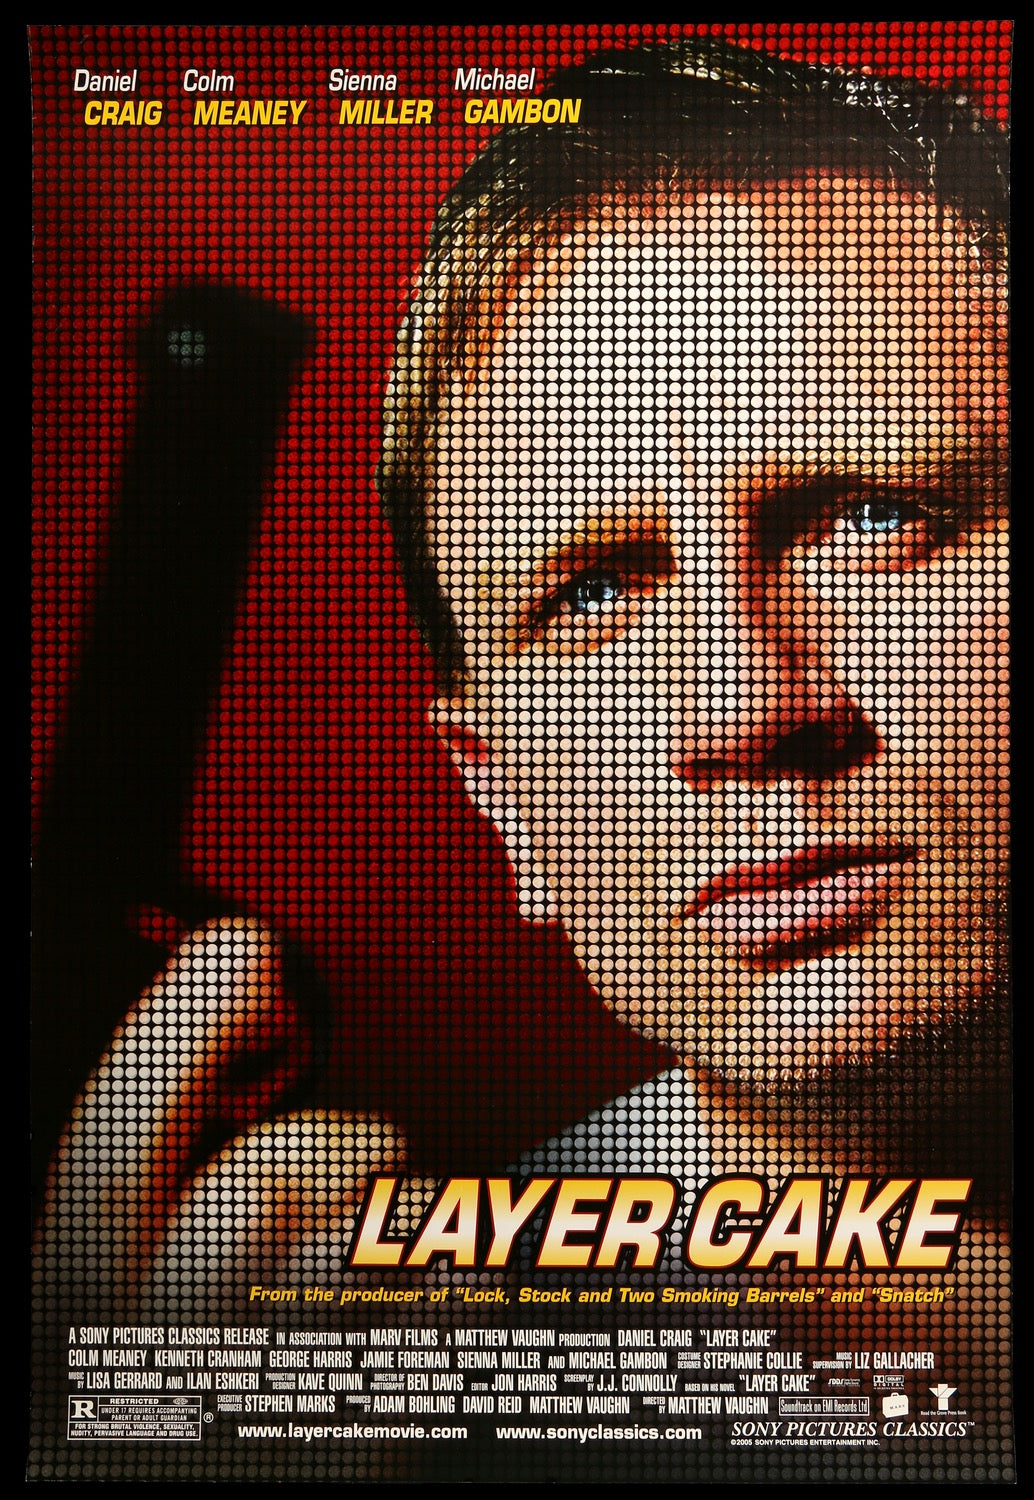 Layer Cake (2004) original movie poster for sale at Original Film Art